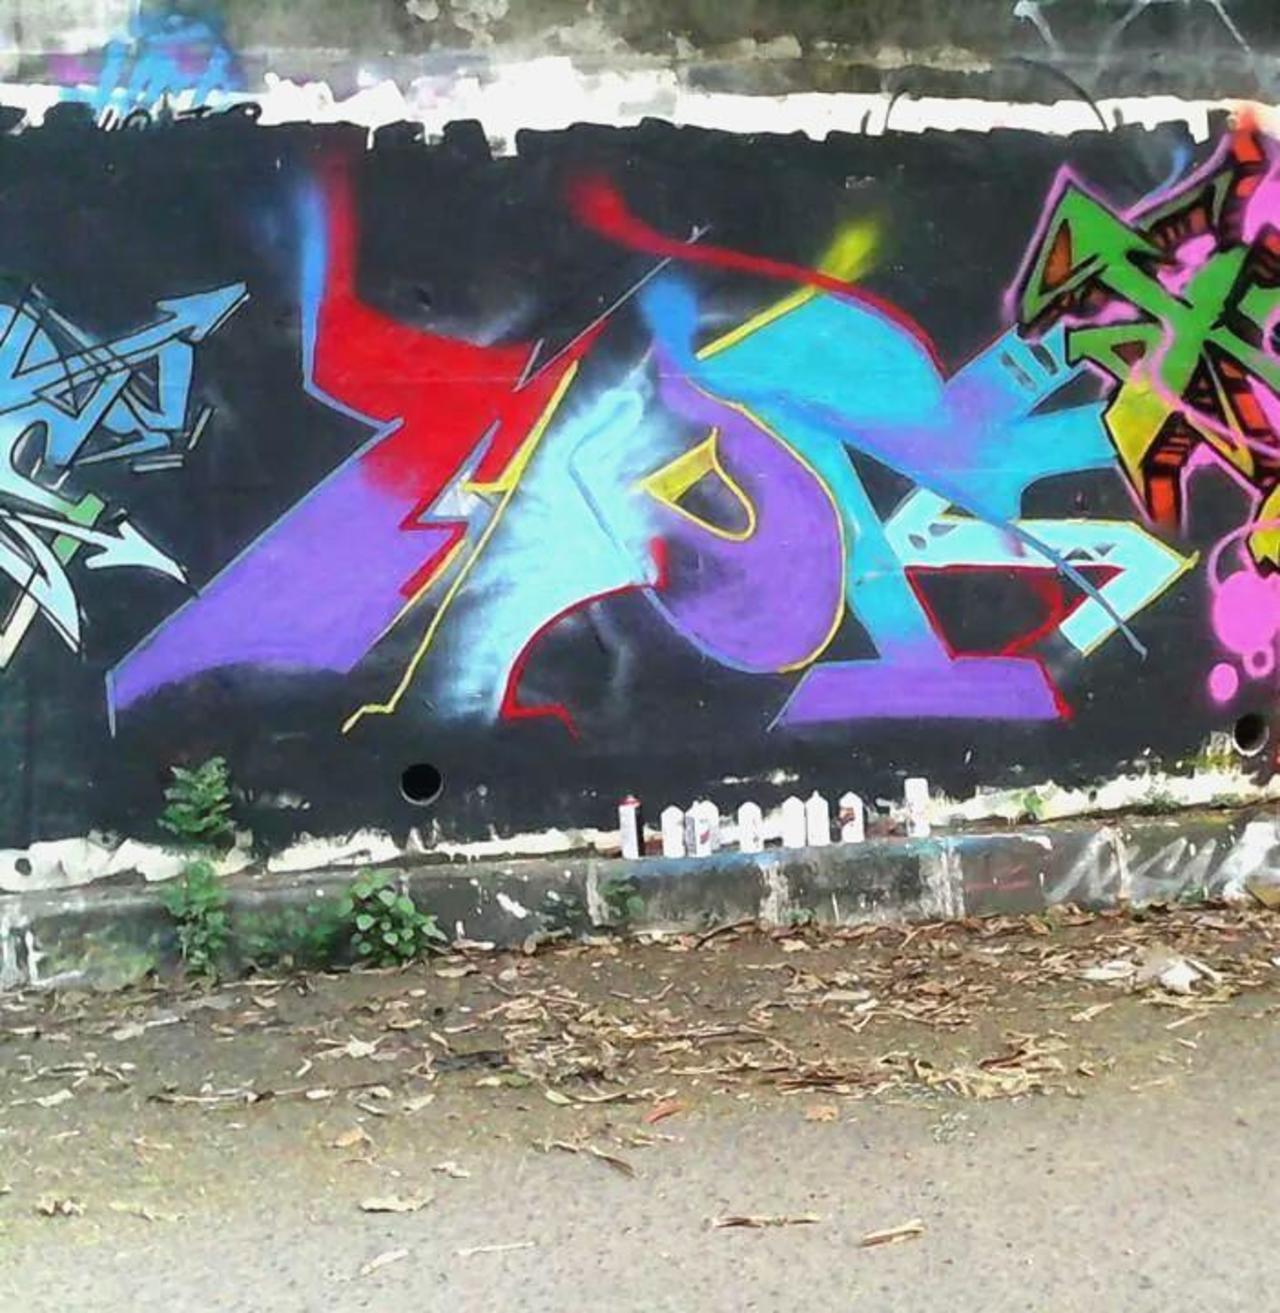 MURV JKS (@bagasFwicaksono) TMB Attack 2014 #Graffiti #Art #Streetart #MURV #JKS http://t.co/Bi3tHvtsJH